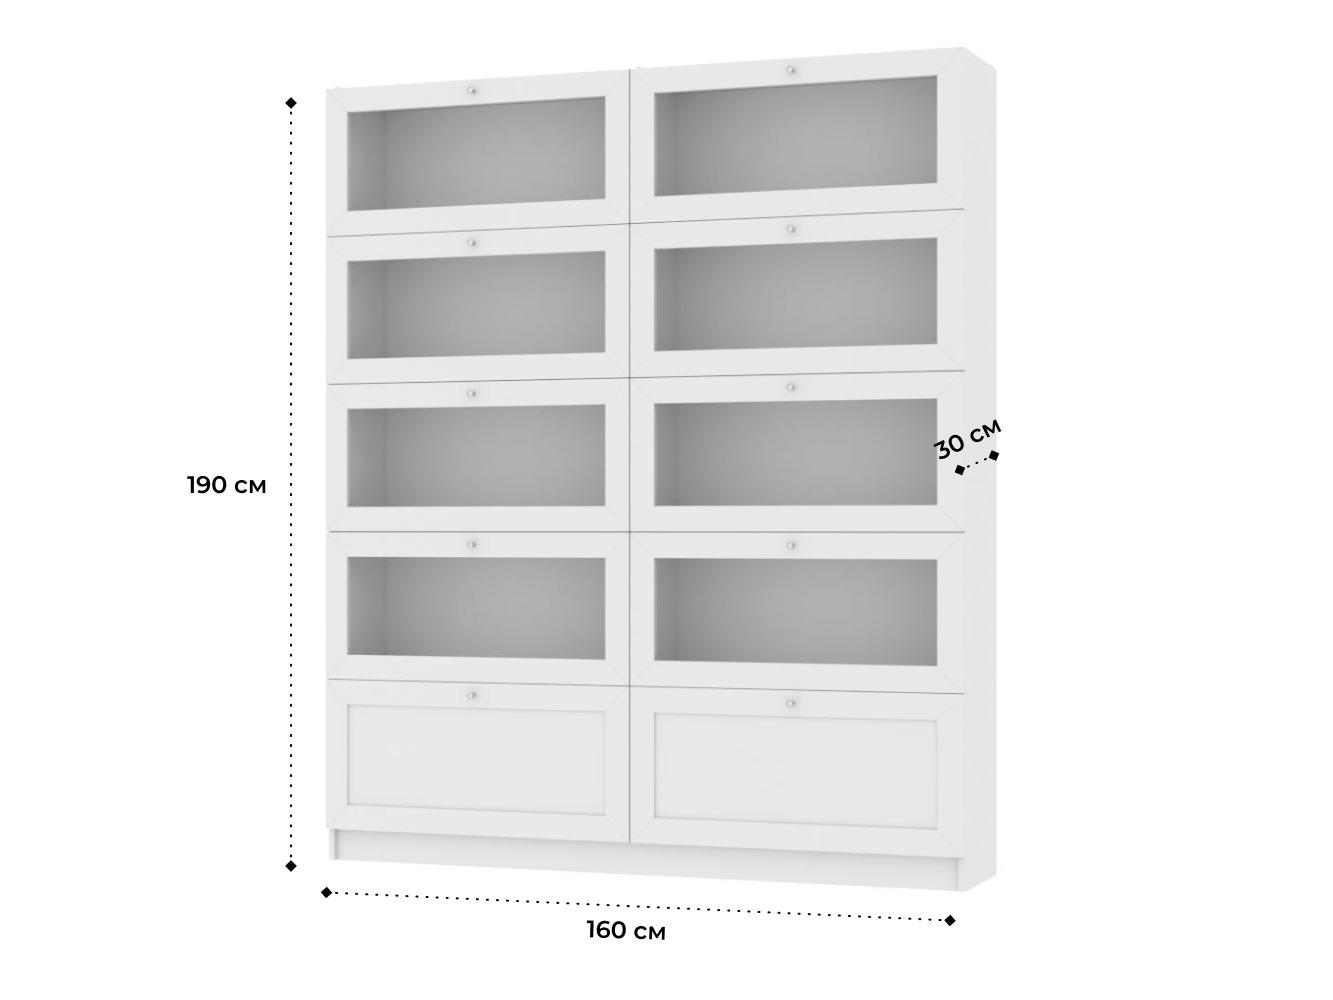 Книжный шкаф Билли 376 white ИКЕА (IKEA) изображение товара